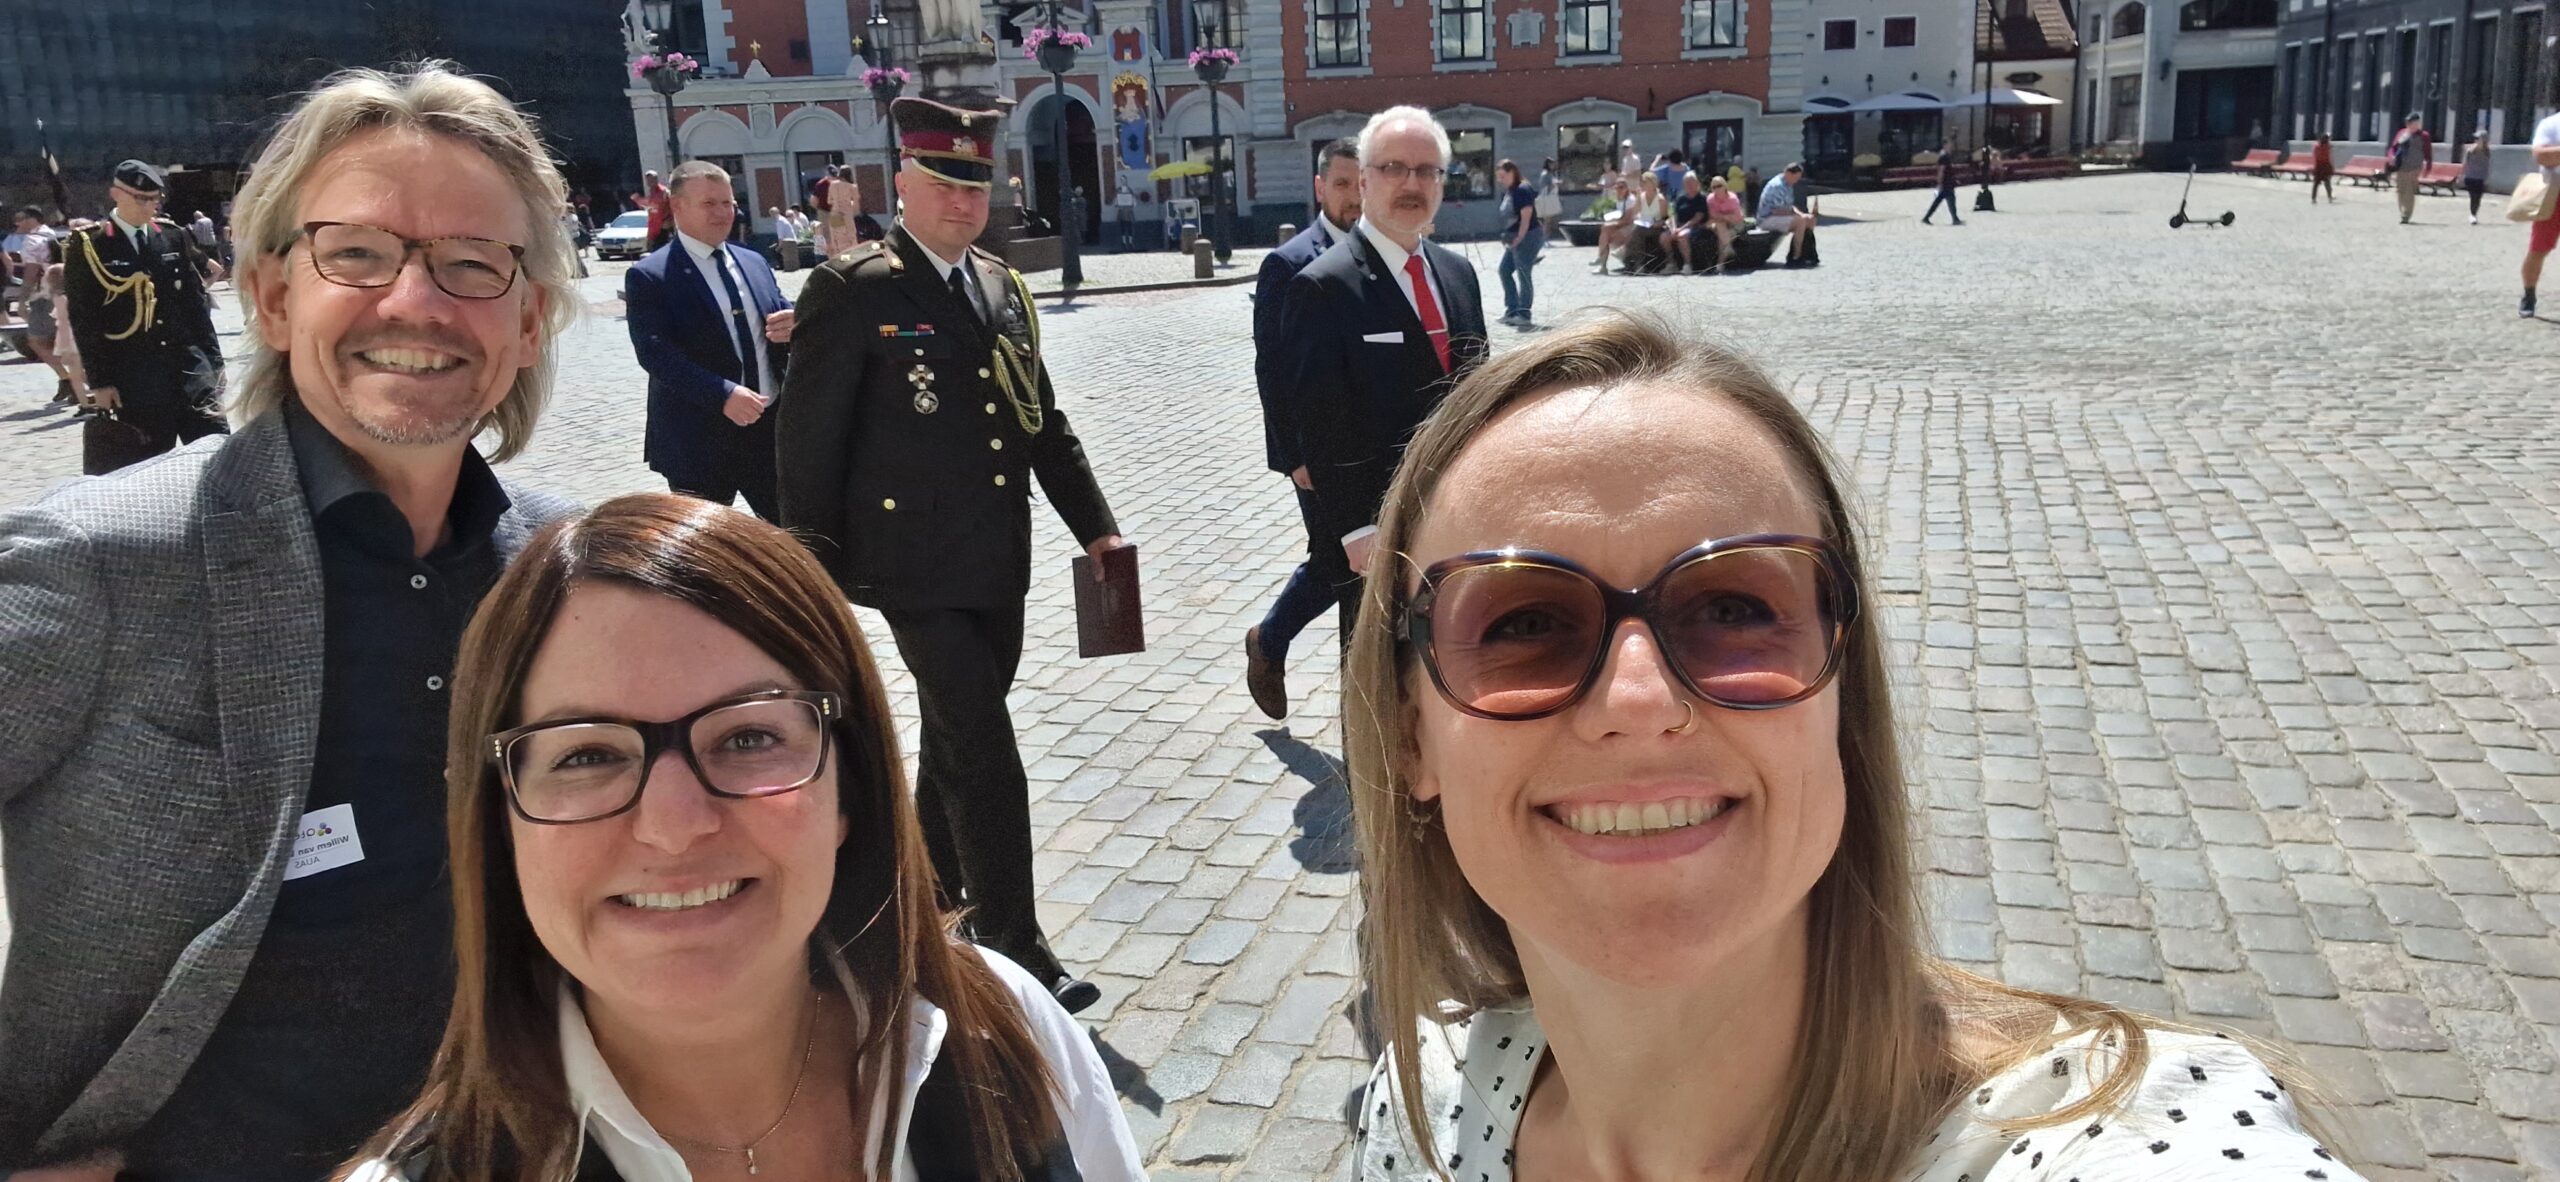 ATELIER partners met Latvia's president Egils Levits in front of Riga's City Hall